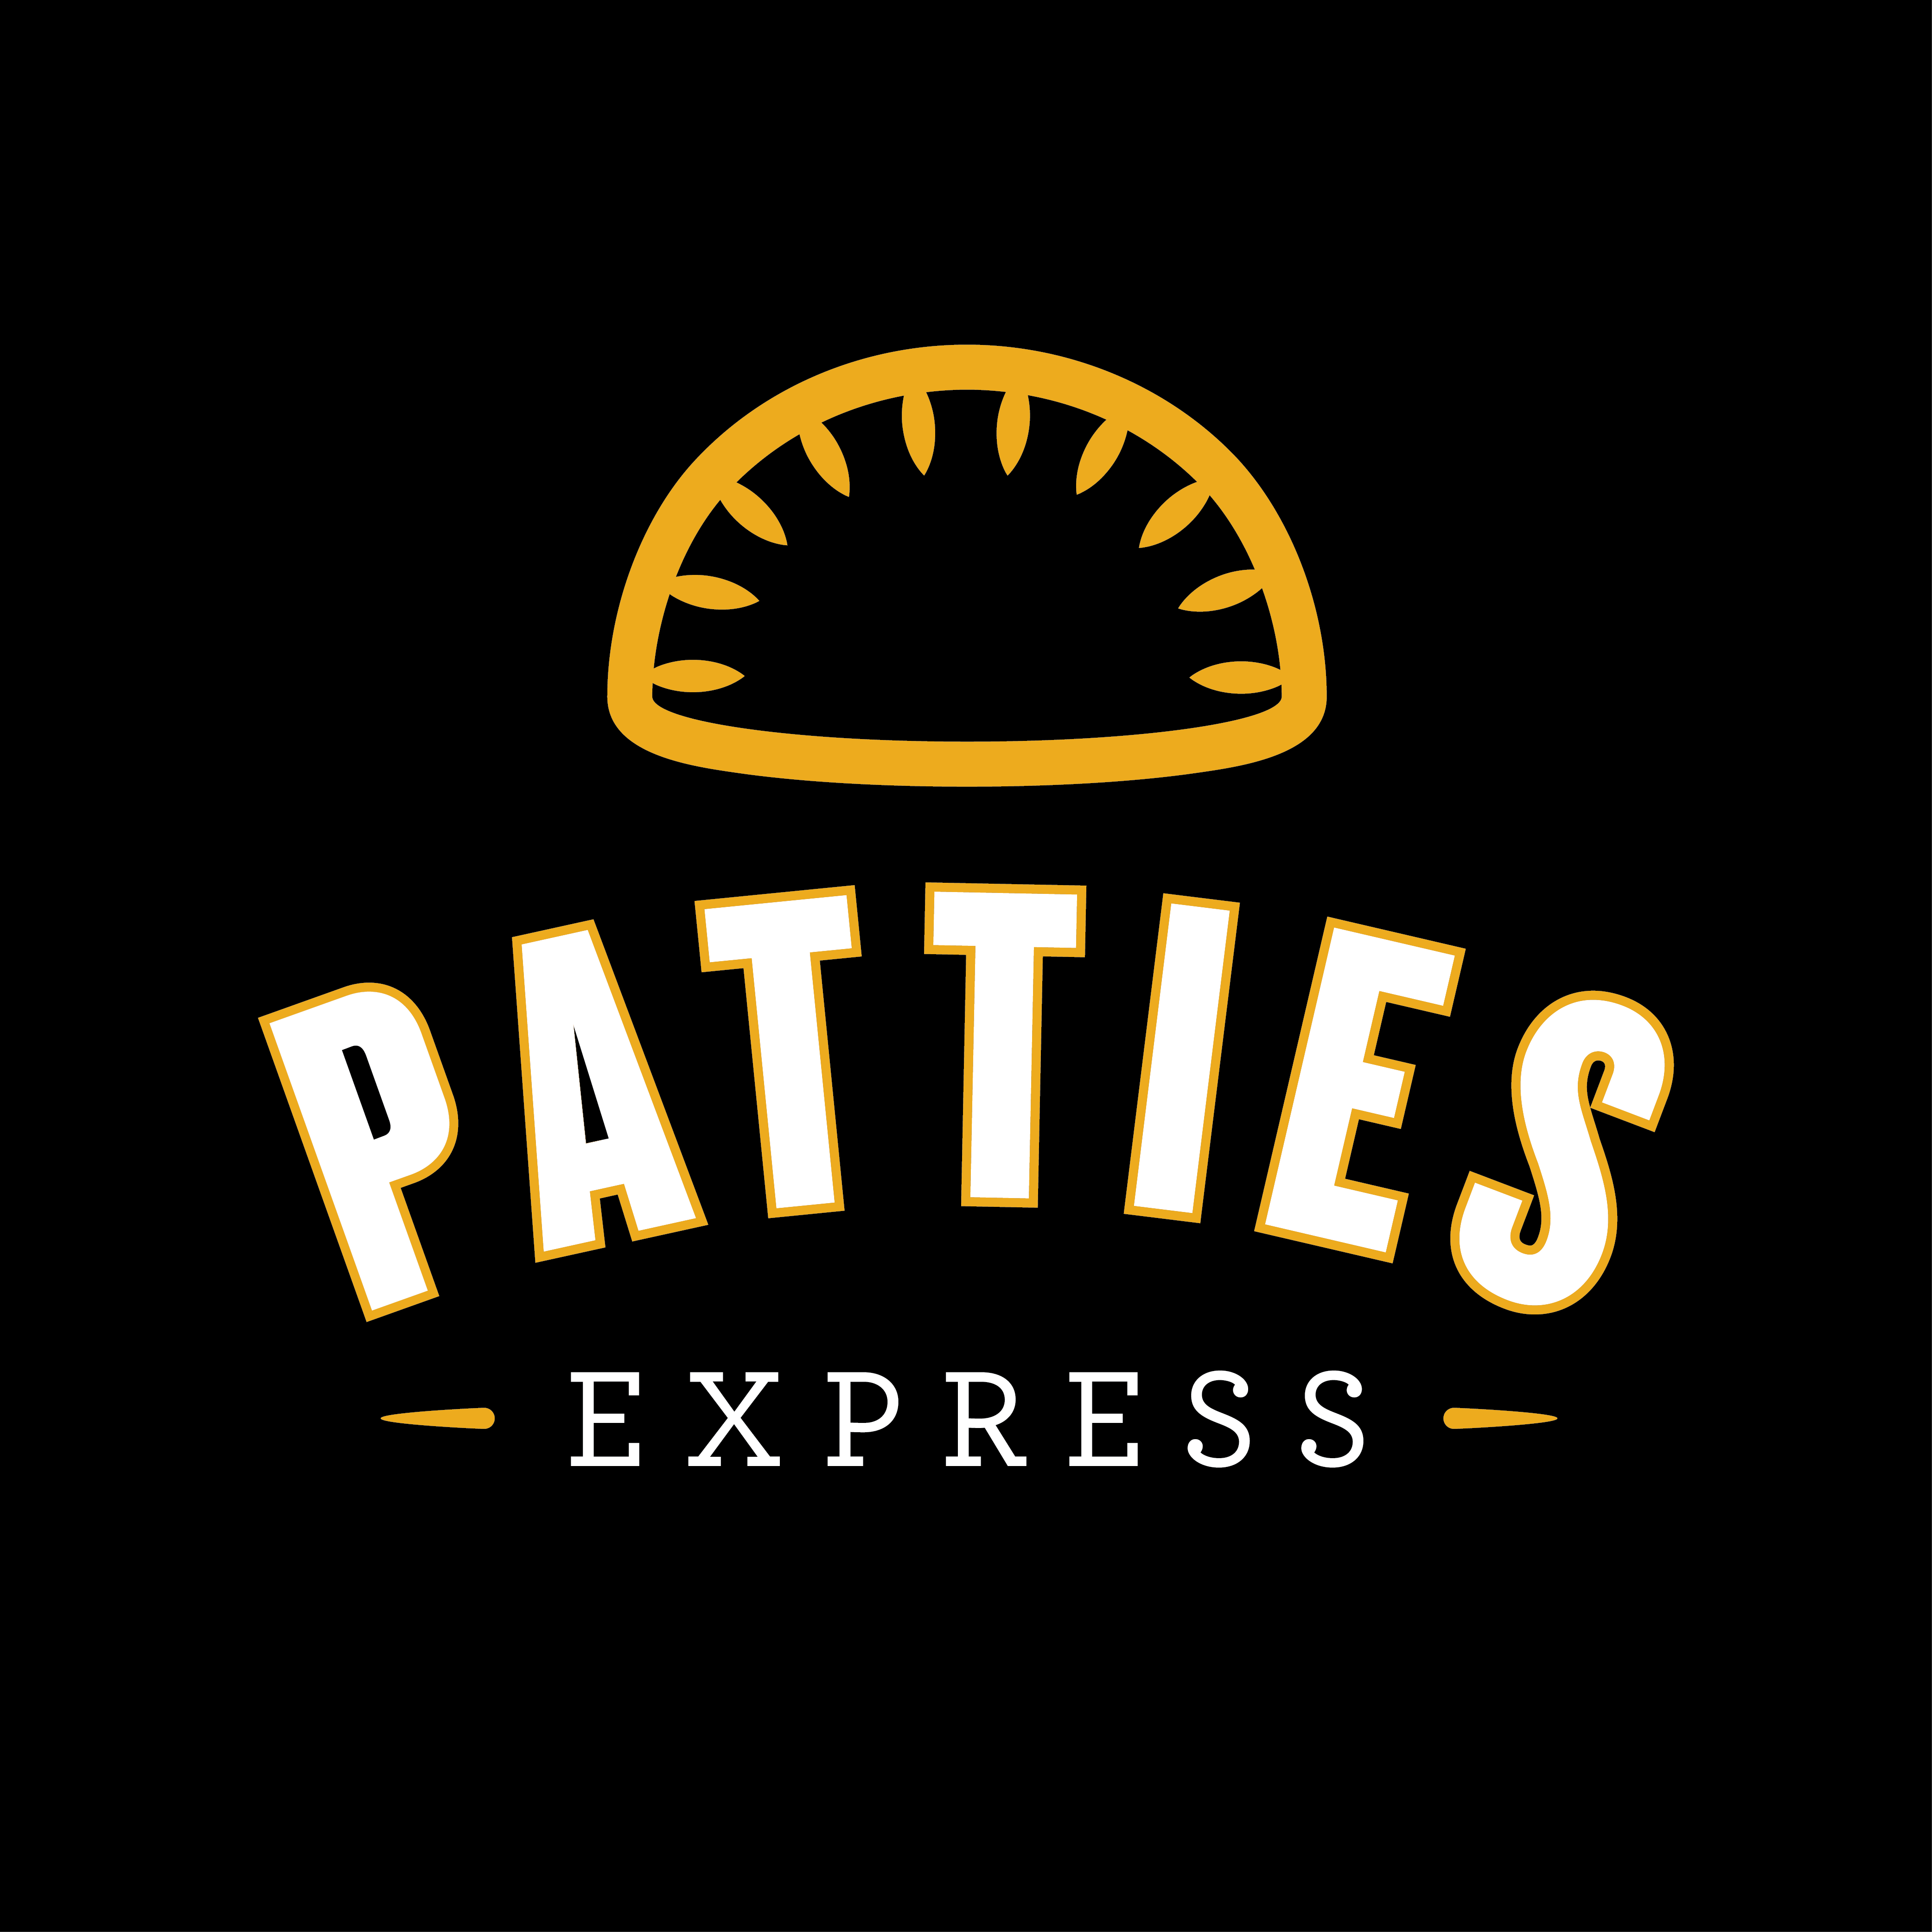 Patties Express logo